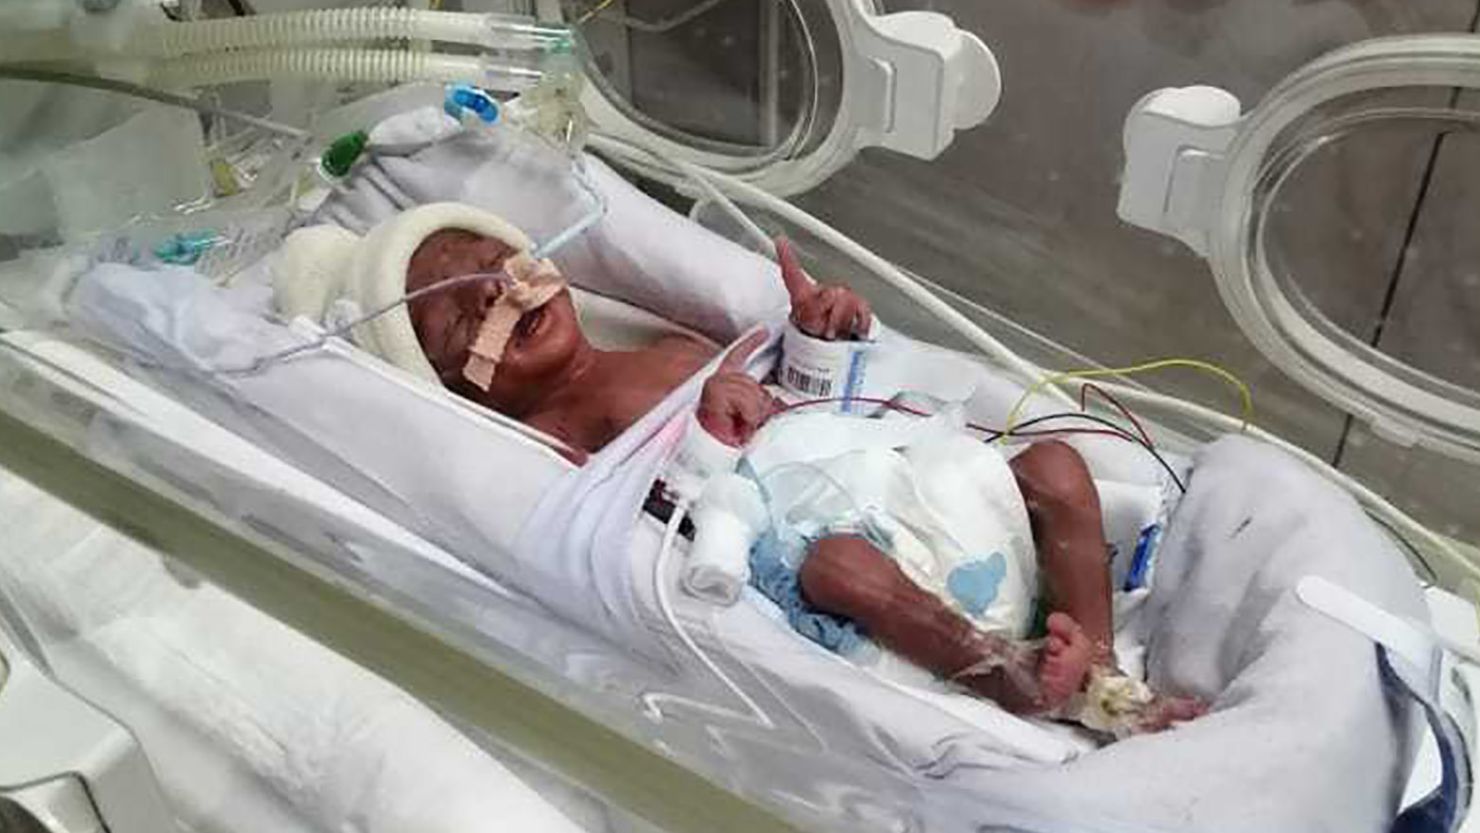 The quadruplet babies were born July 1 at the Latifa Women and Children Hospital in Dubai.